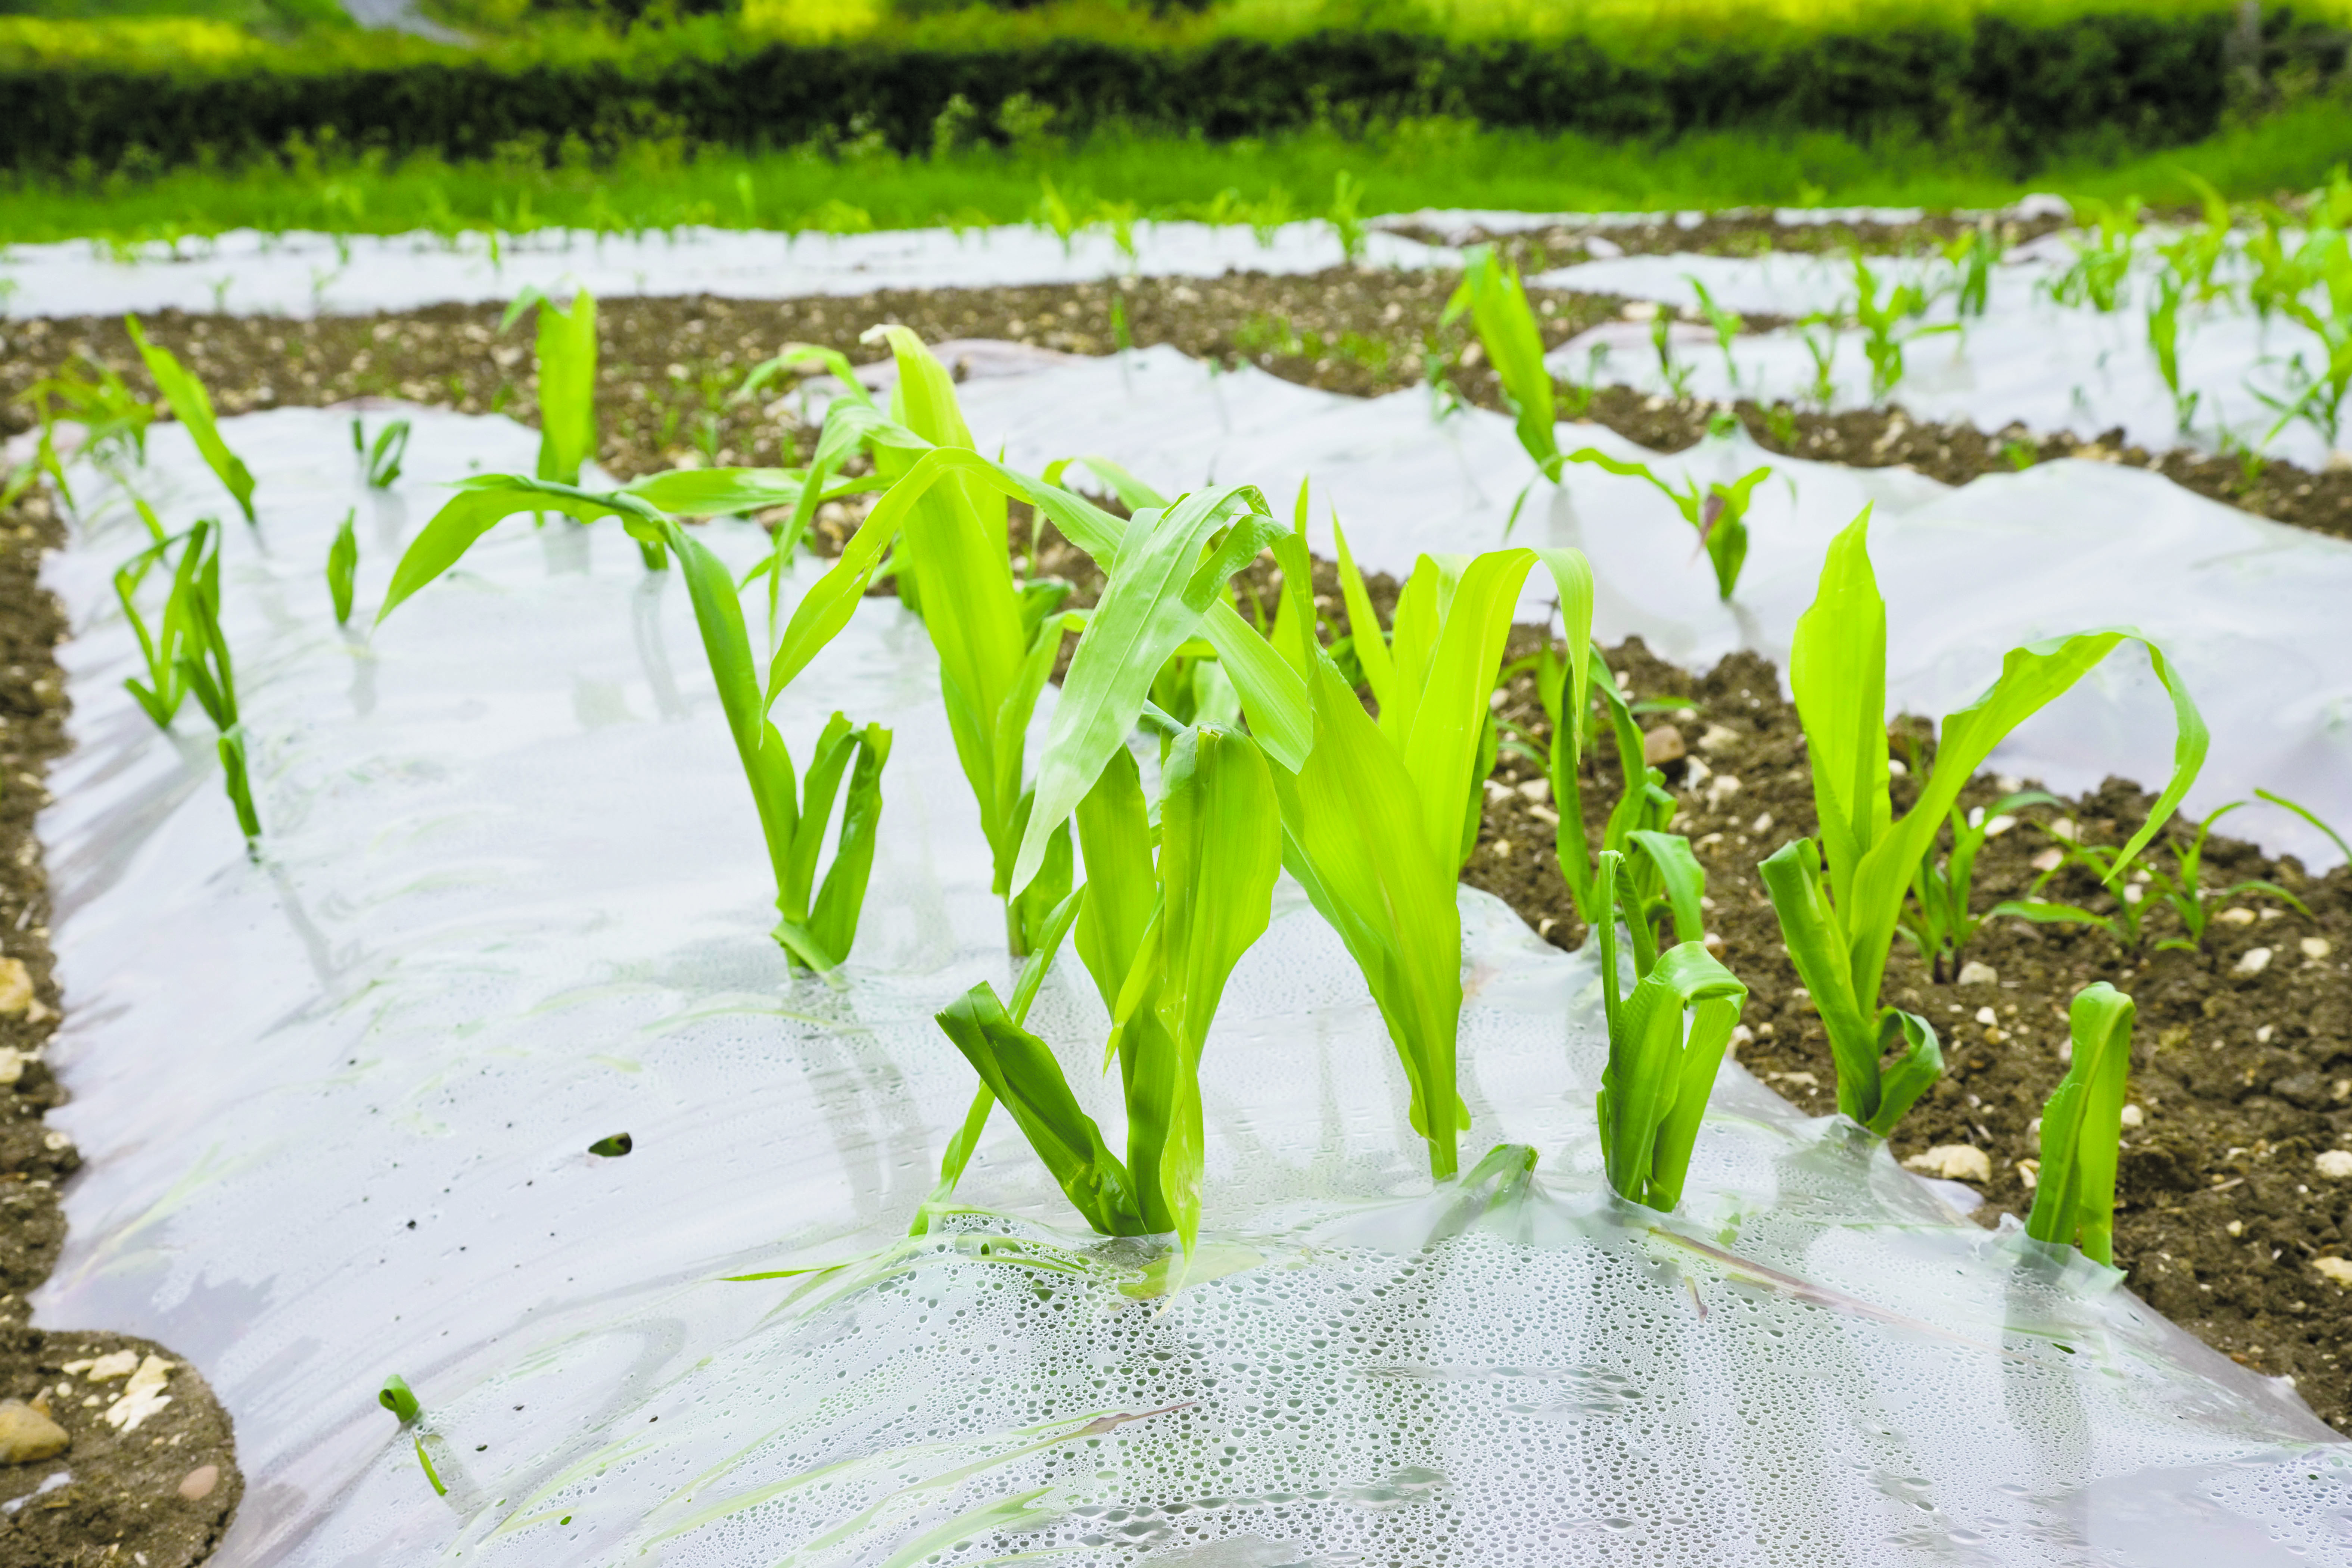 Maize growing under plastic